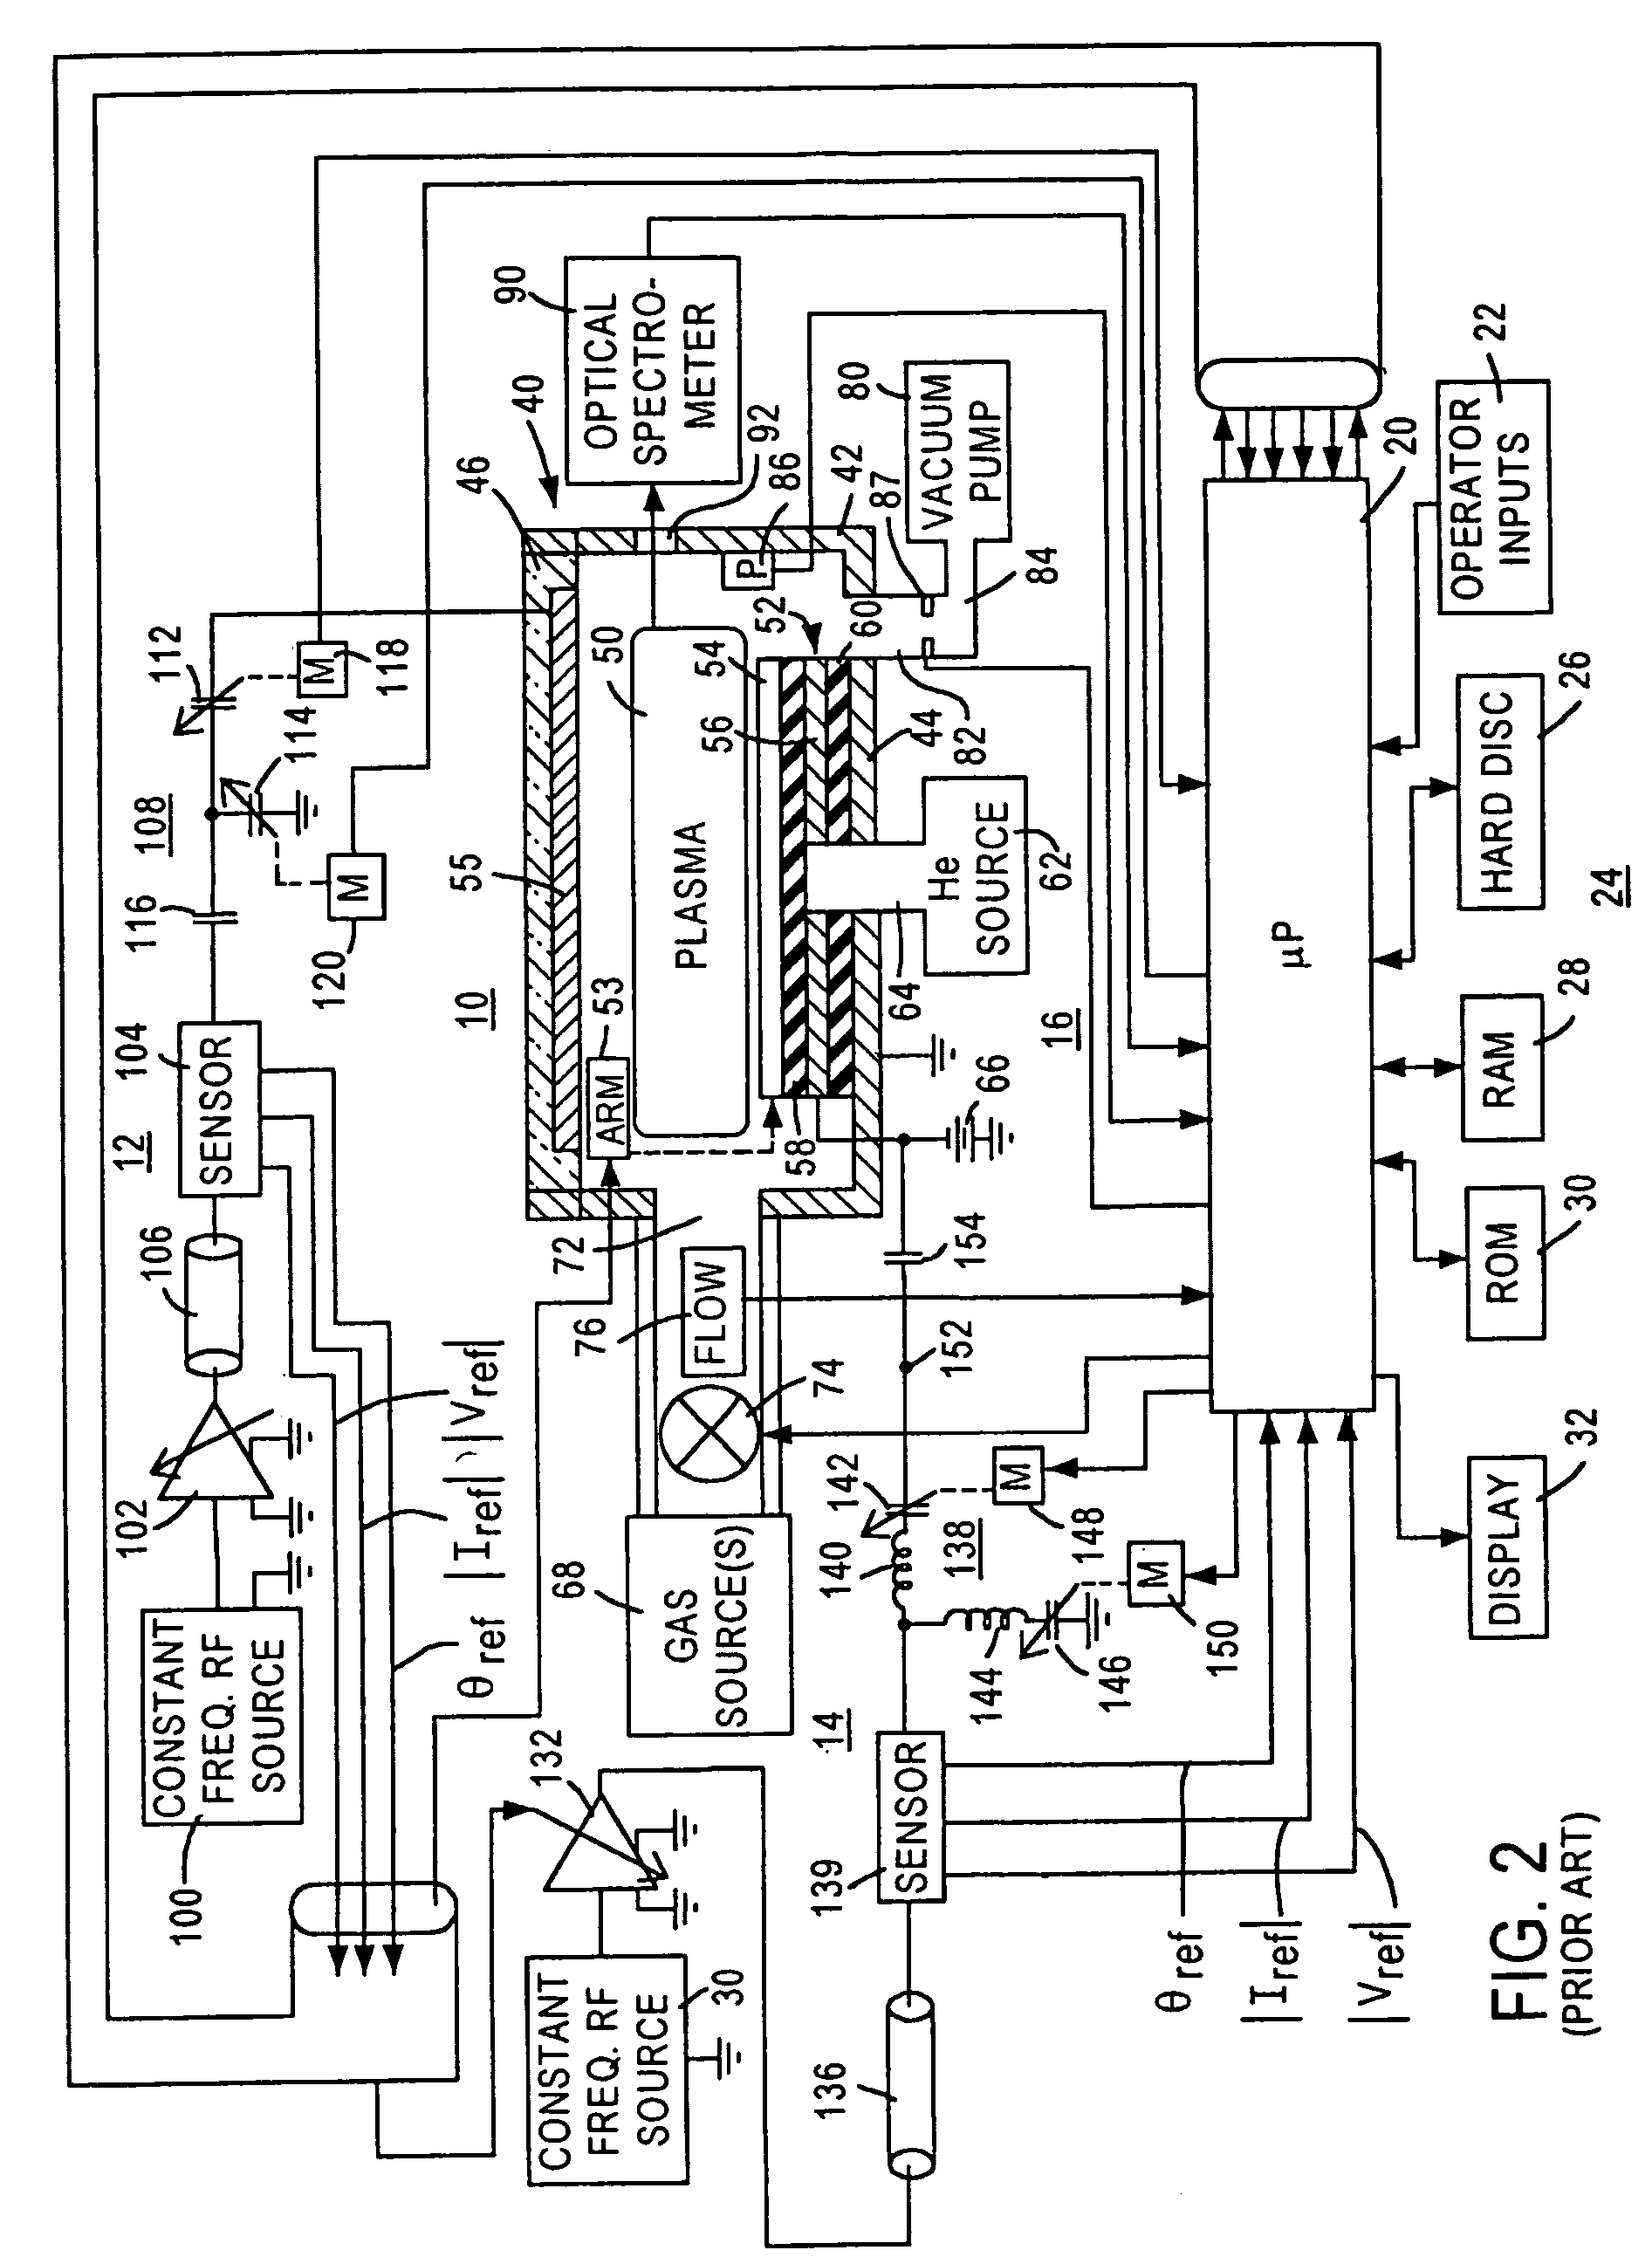 Vacuum plasma processor and method of operating same